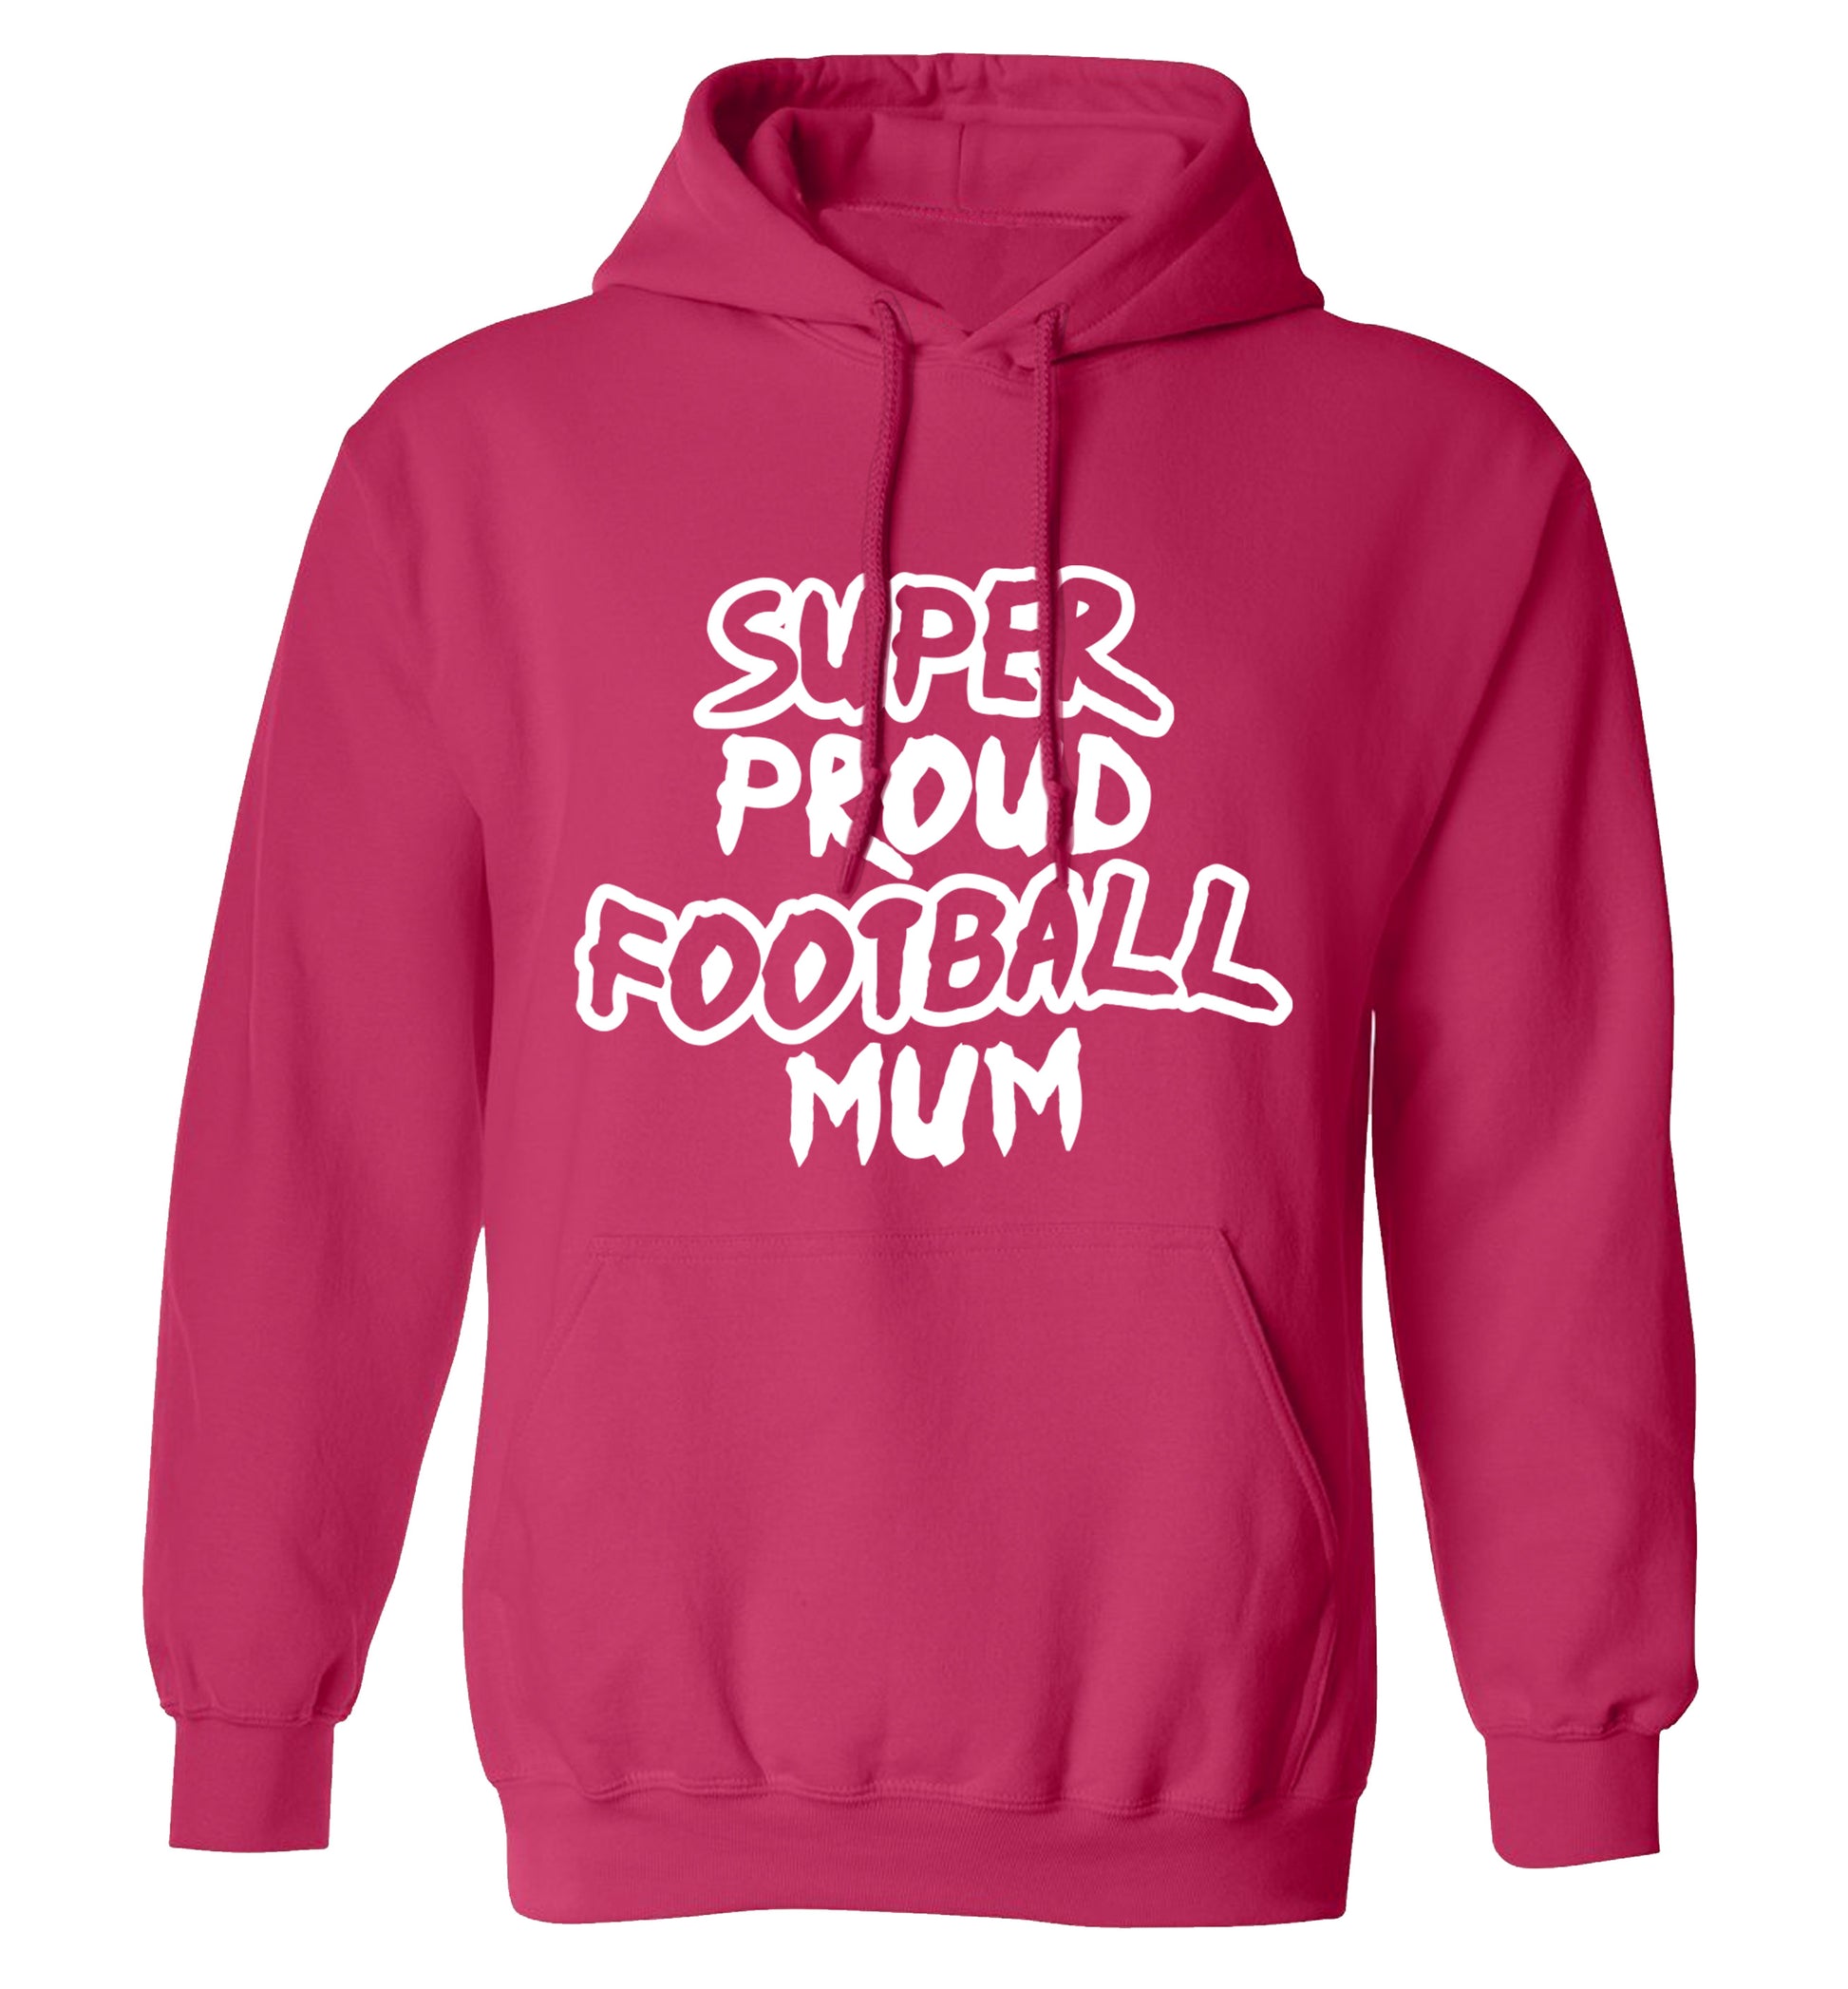 Super proud football mum adults unisexpink hoodie 2XL